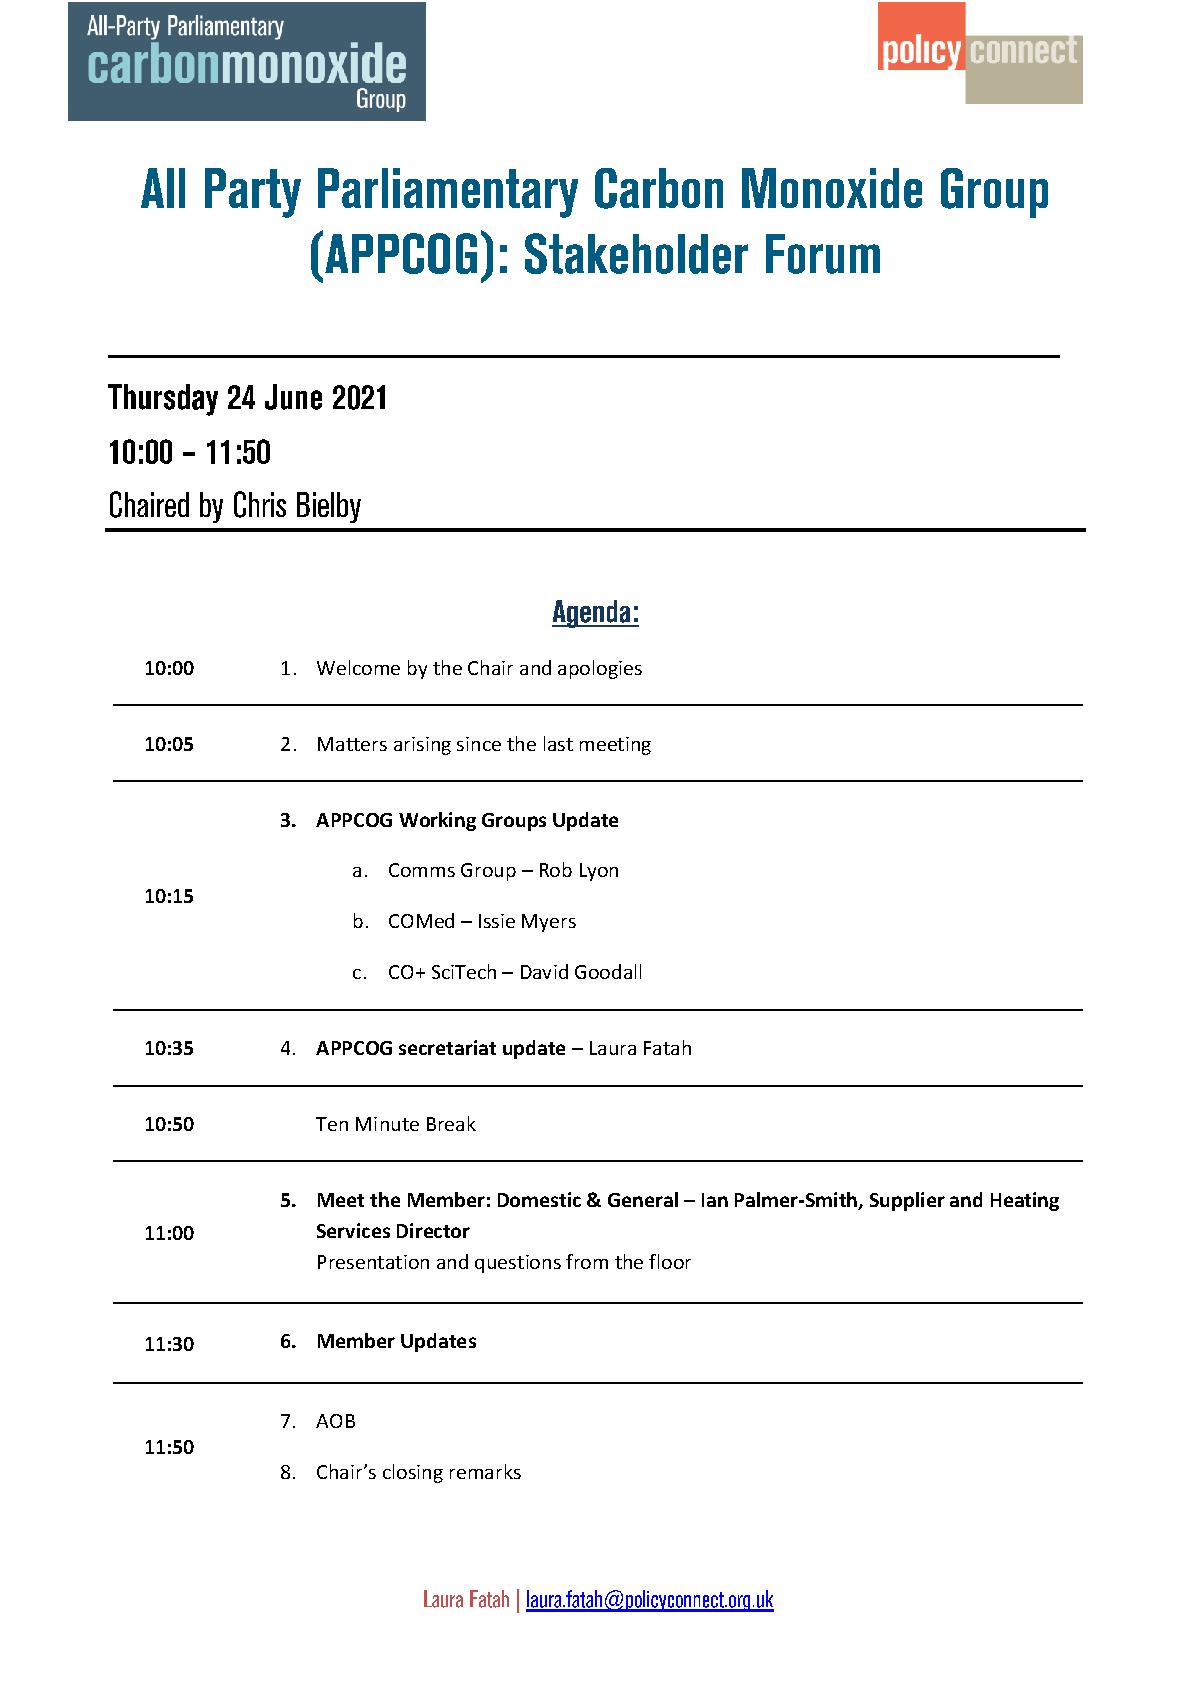 appcog_stakeholder_forum_agenda_24_june_2021_0